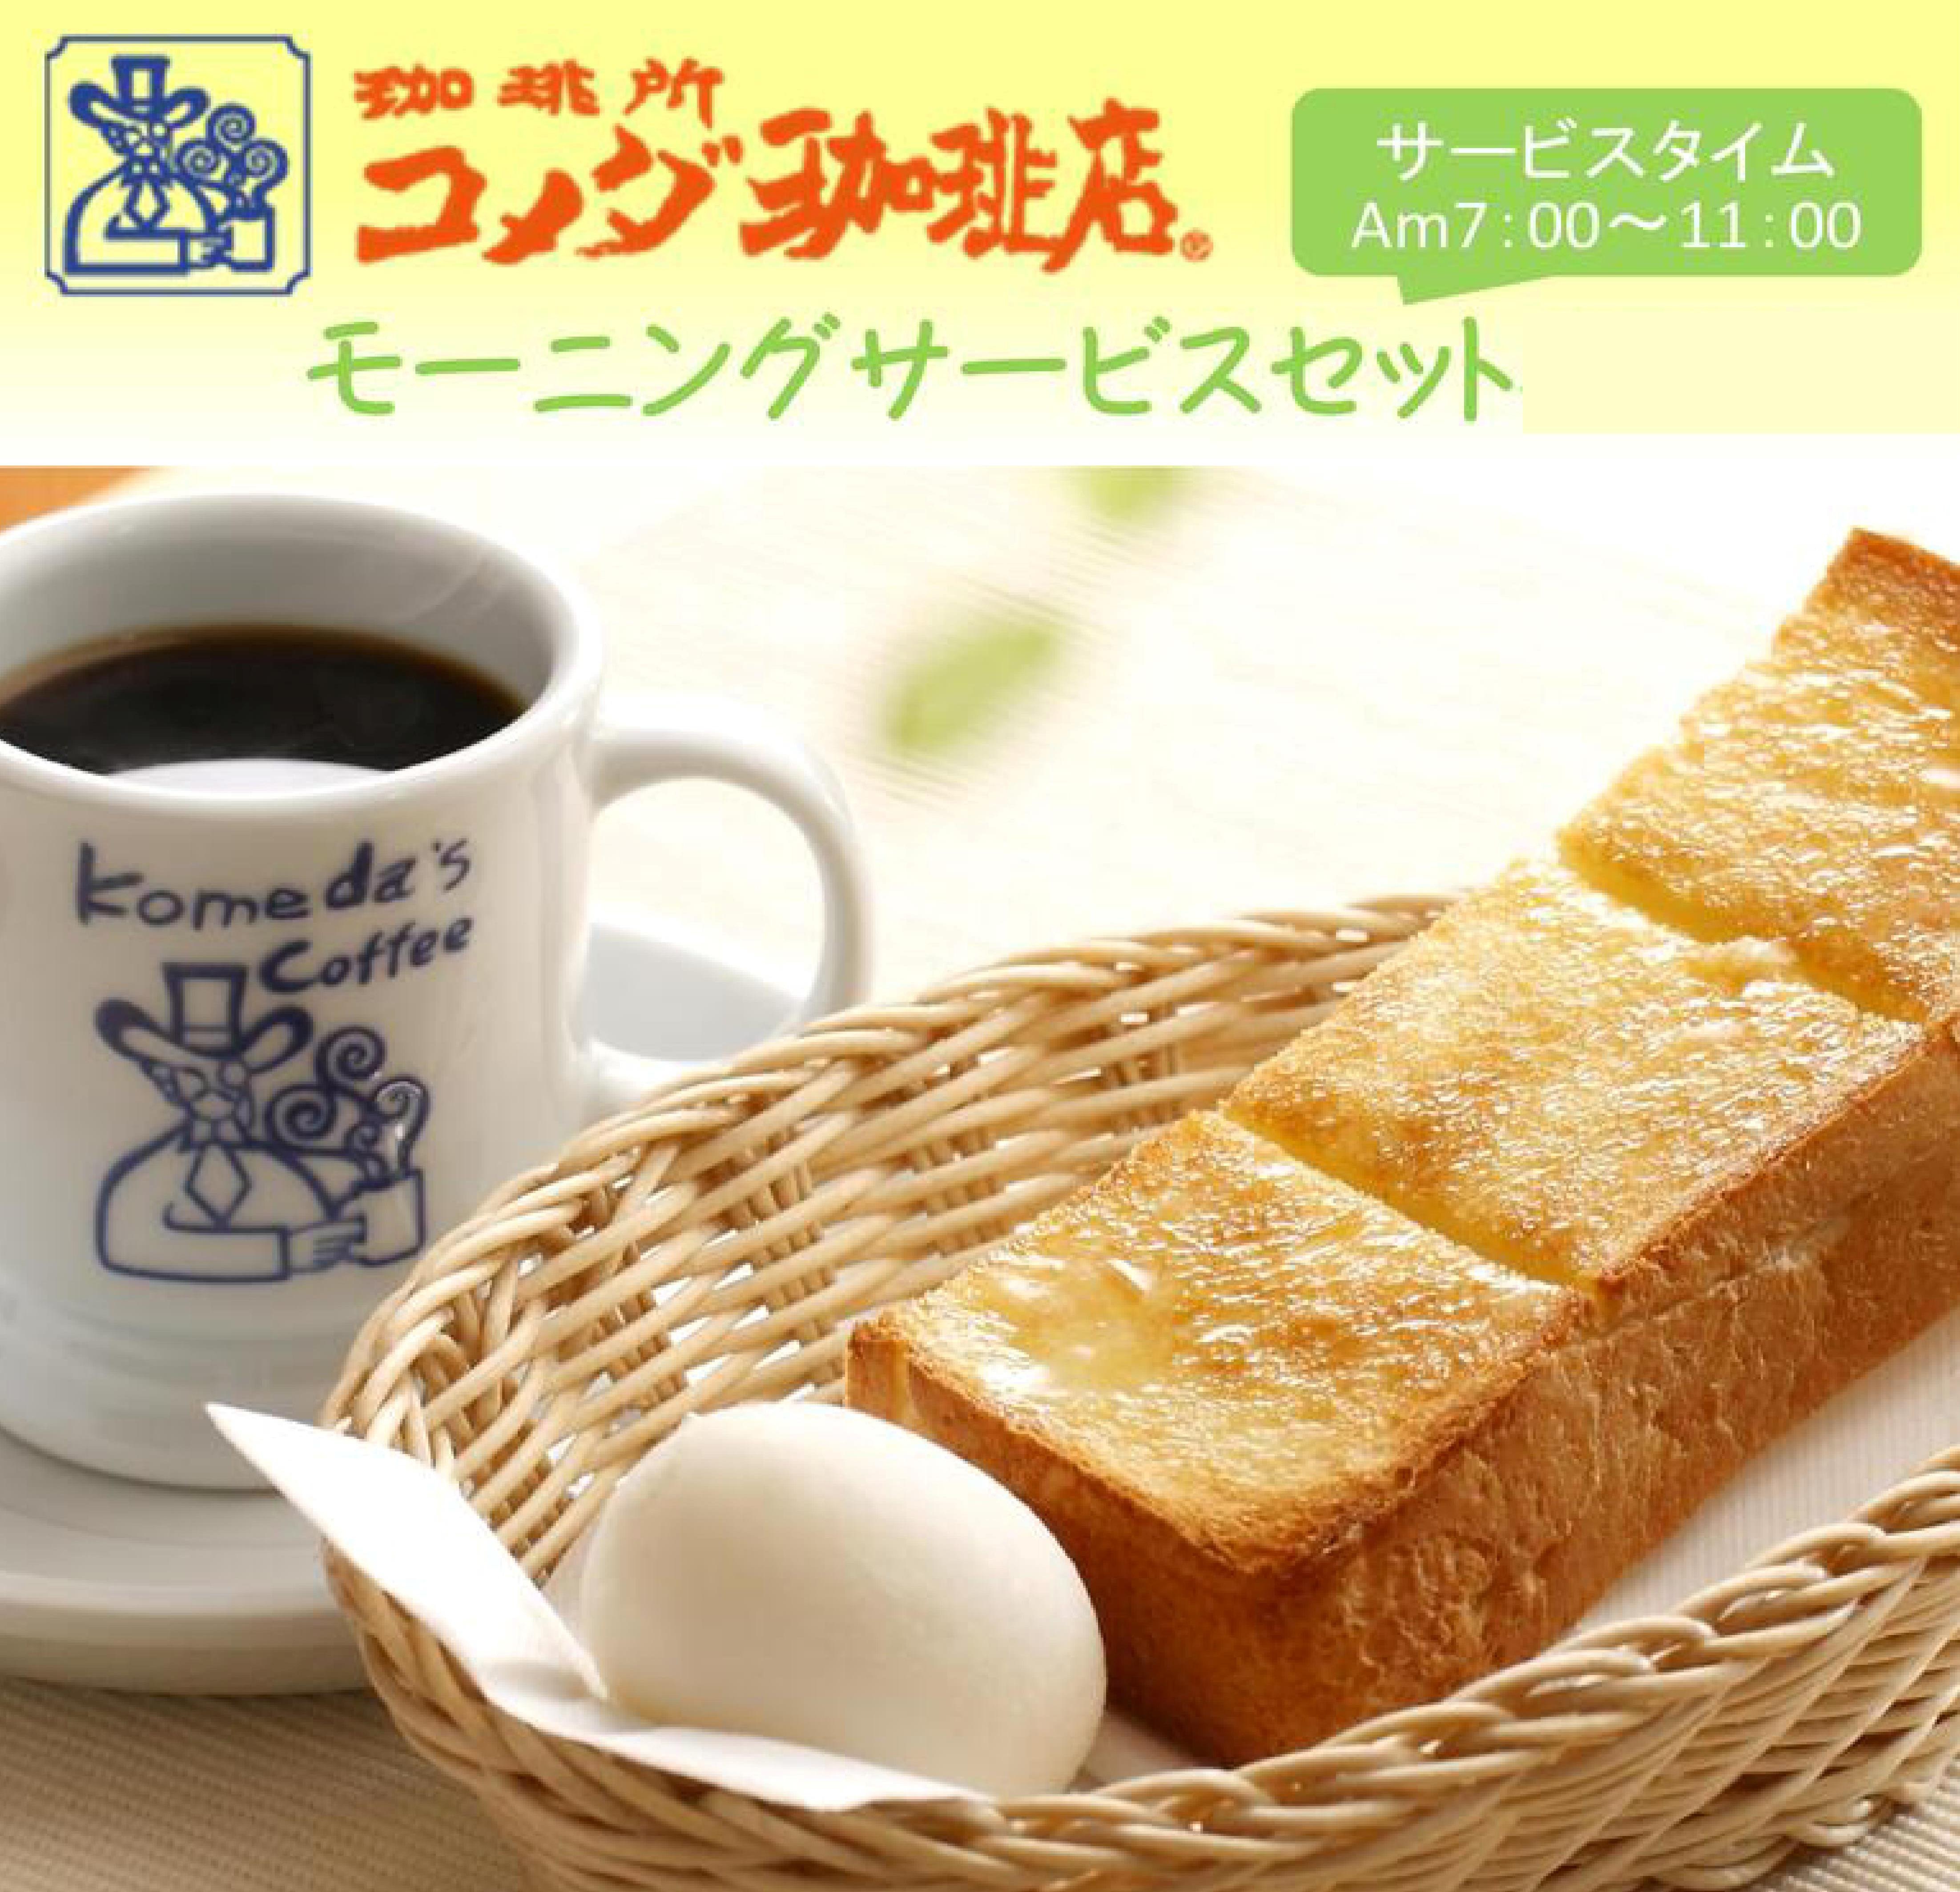 Komeda Coffee Shop Morning Service